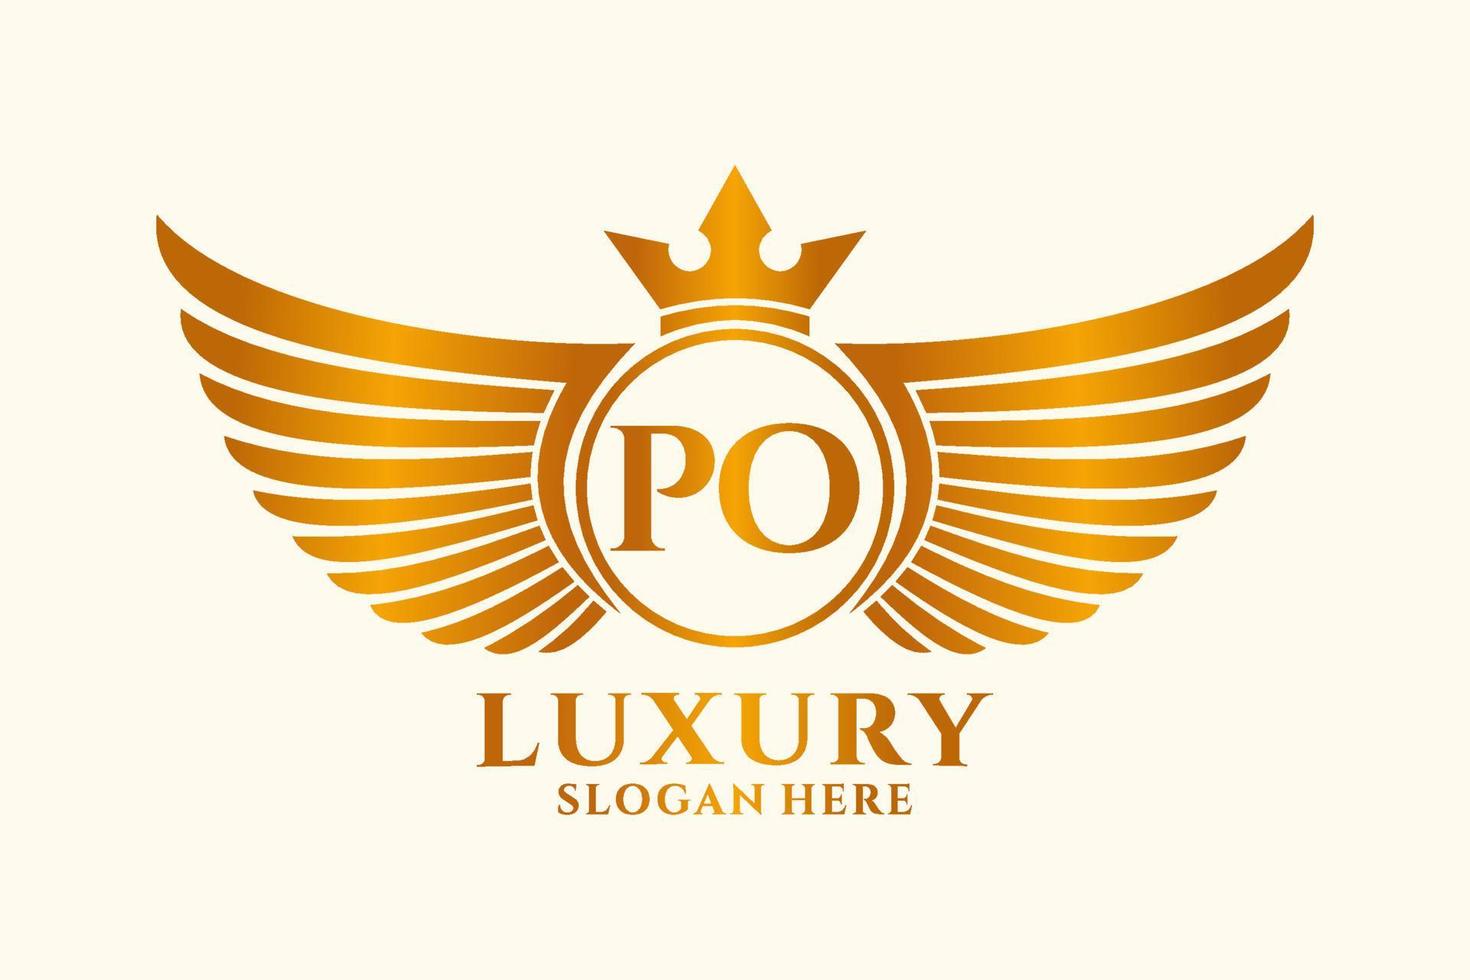 luxe Koninklijk vleugel brief po kam goud kleur logo vector, zege logo, kam logo, vleugel logo, vector logo sjabloon.